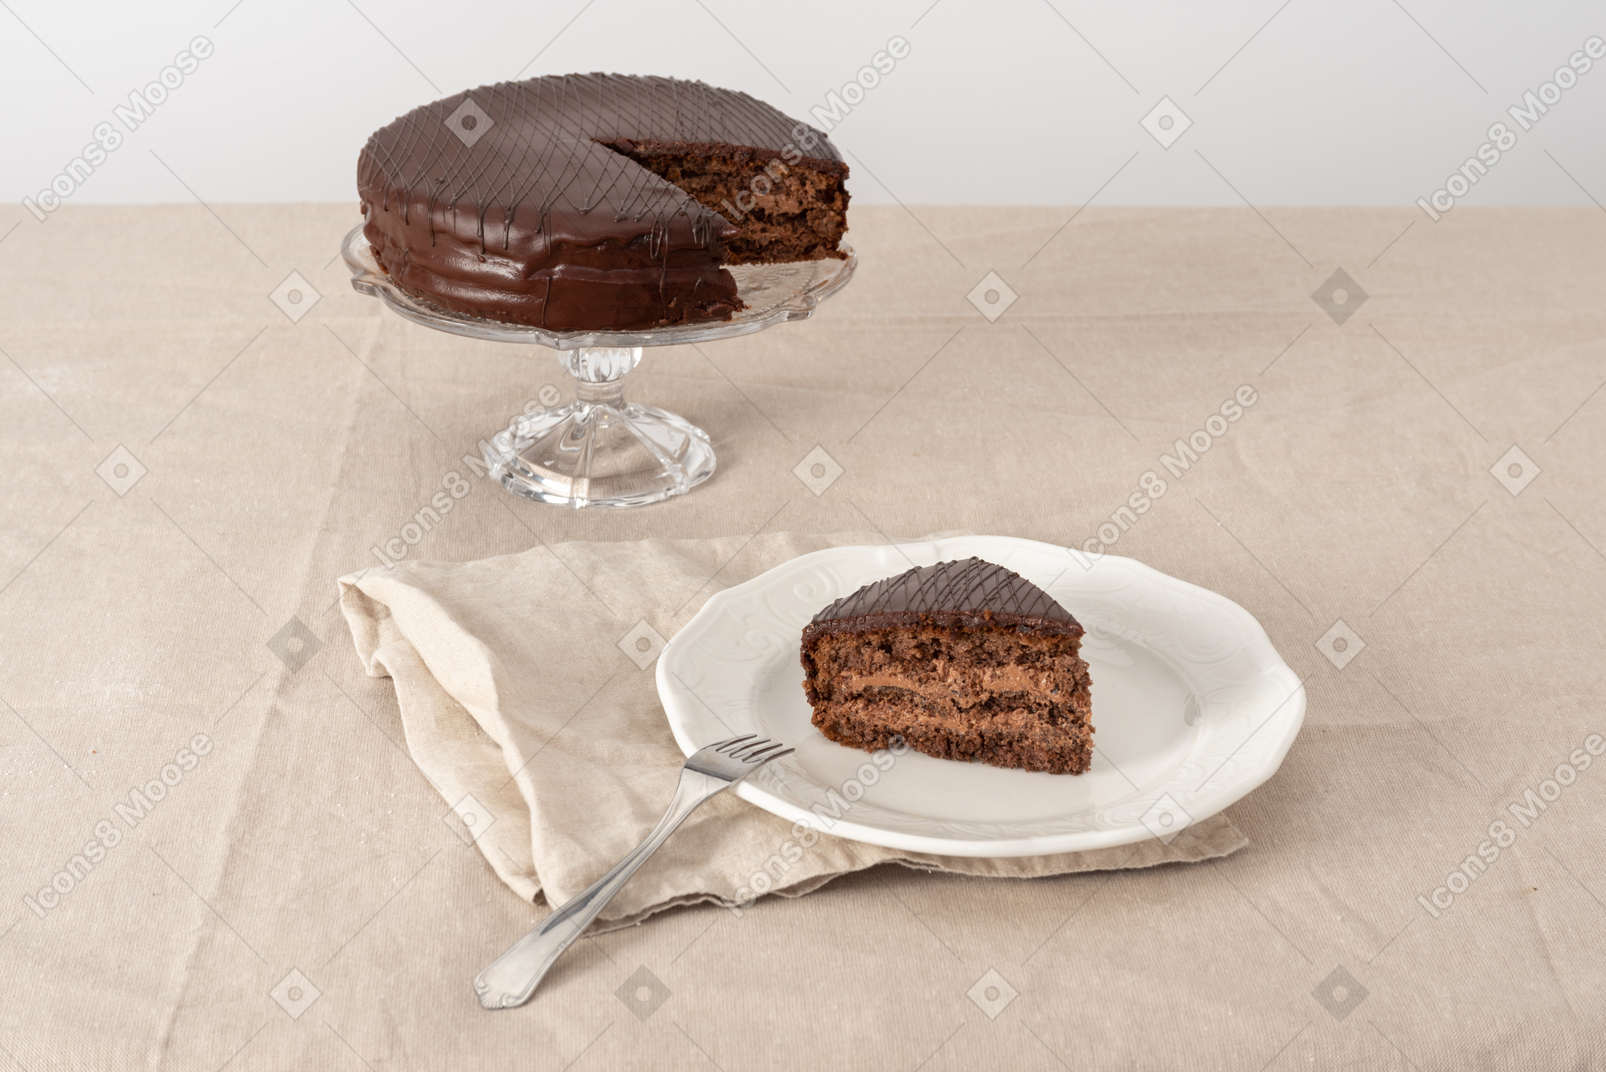 Chocolate cake is a universal language